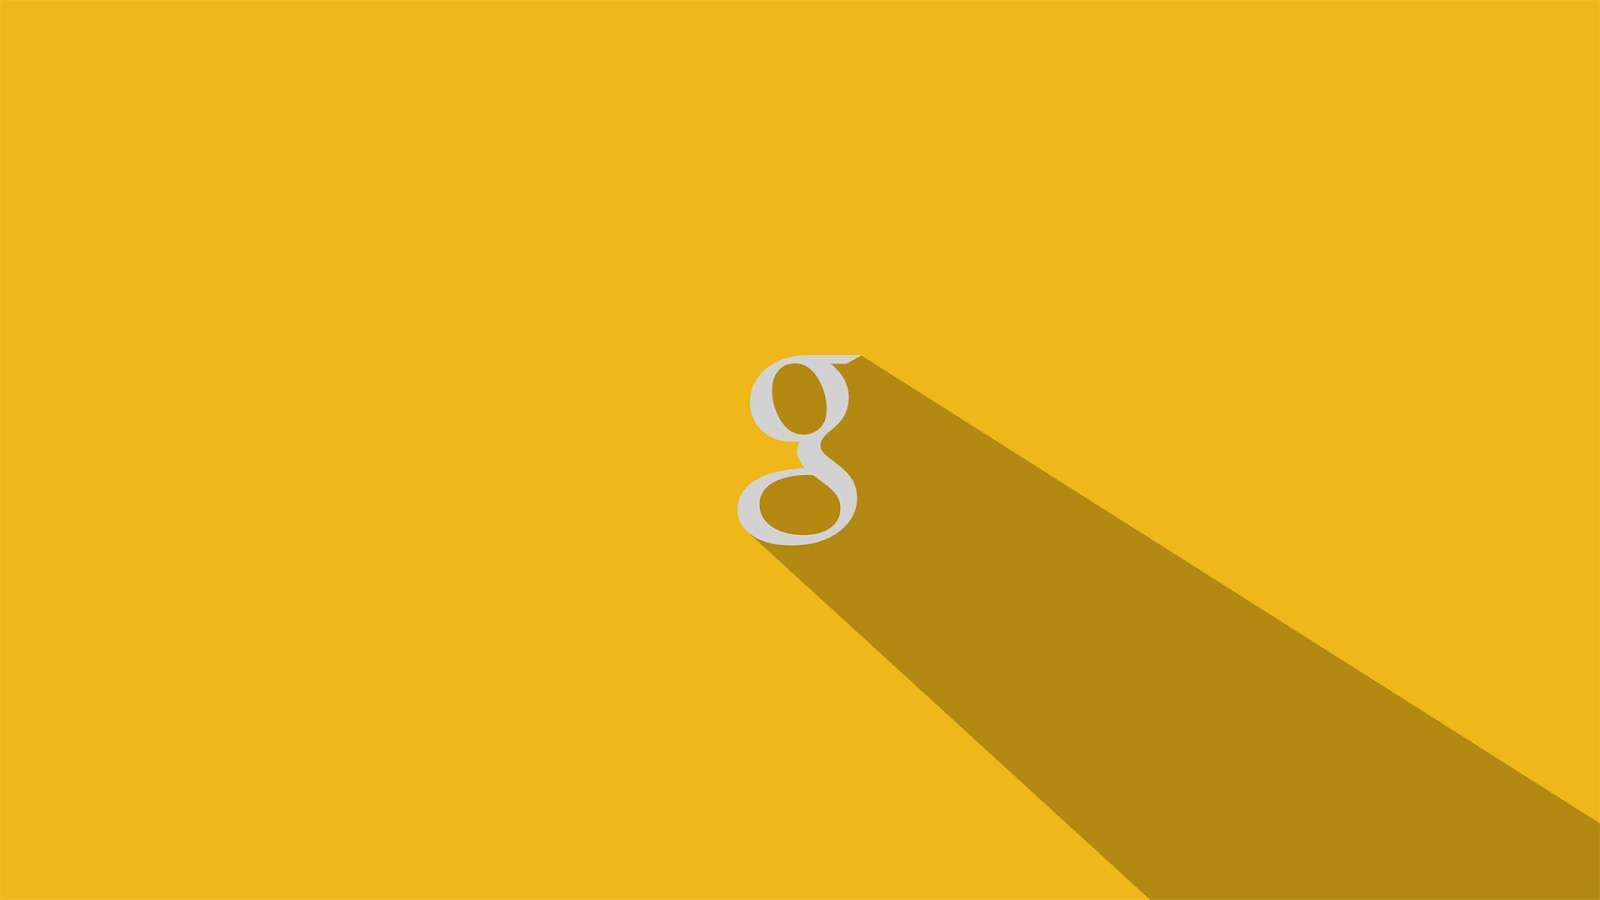 gmail wallpaper hd,giallo,arancia,testo,font,linea